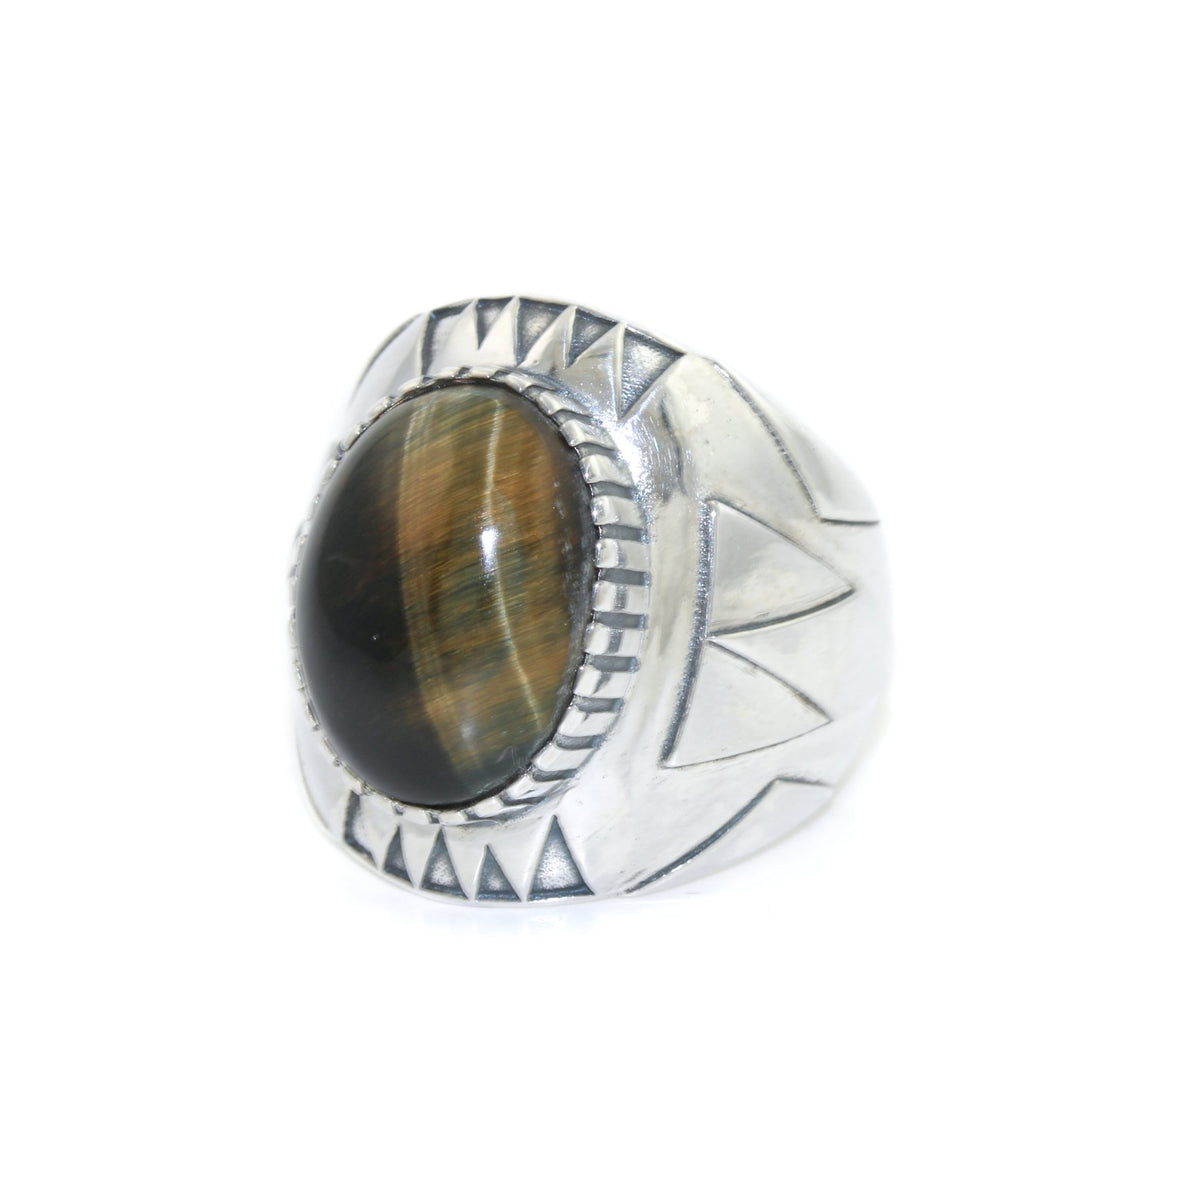 Geometric "Delta Δ" Ring x Blue Tiger's Eye by Kingdom - Kingdom Jewelry